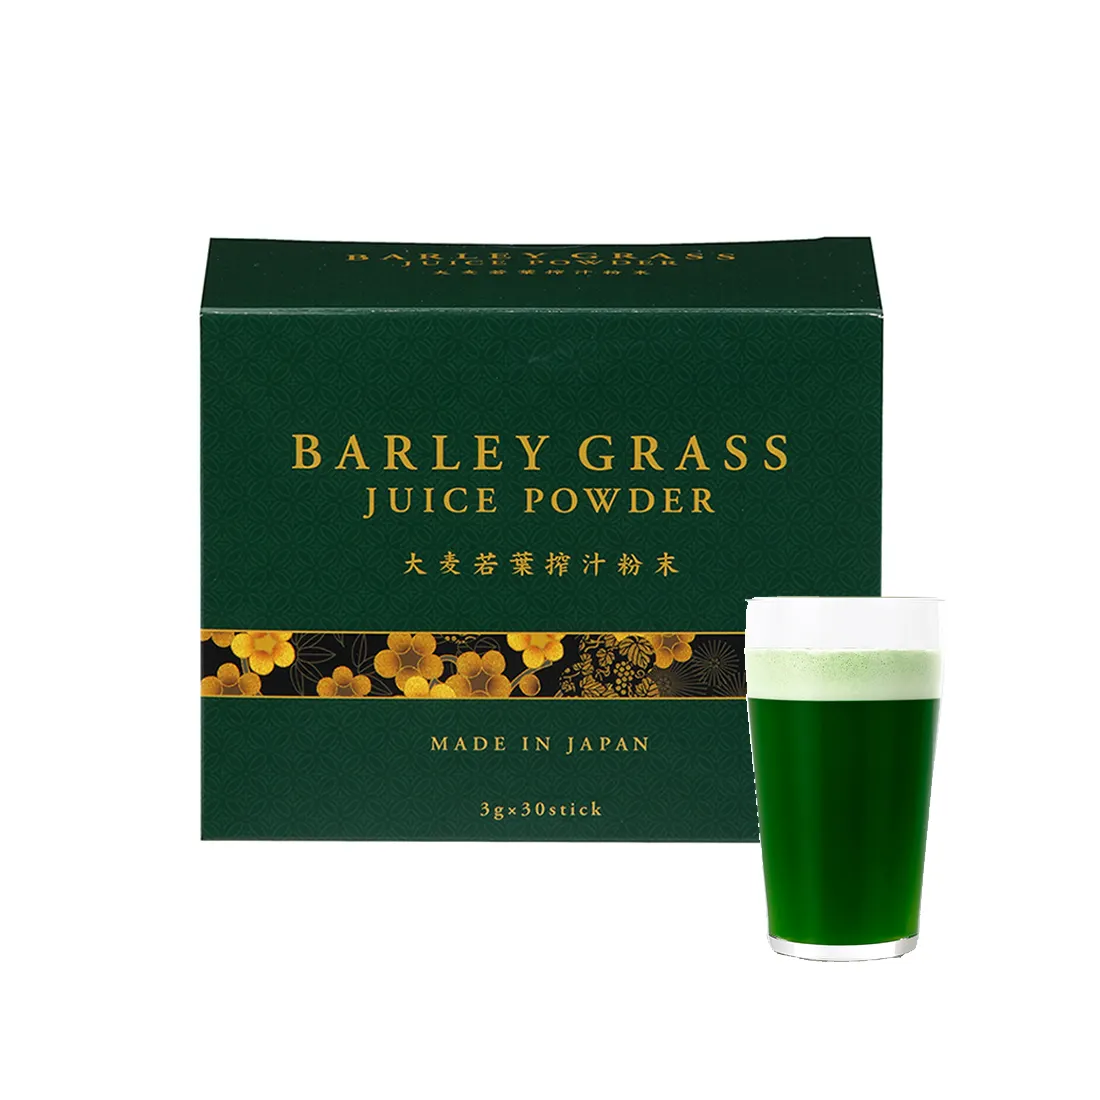 Barley grass watersoluble dietary fiber instant powder drink mix